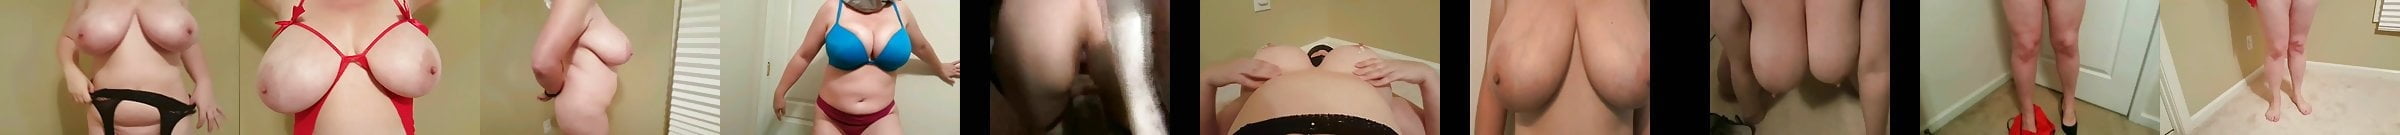 Big Hanging Tits Porn Videos Xhamster